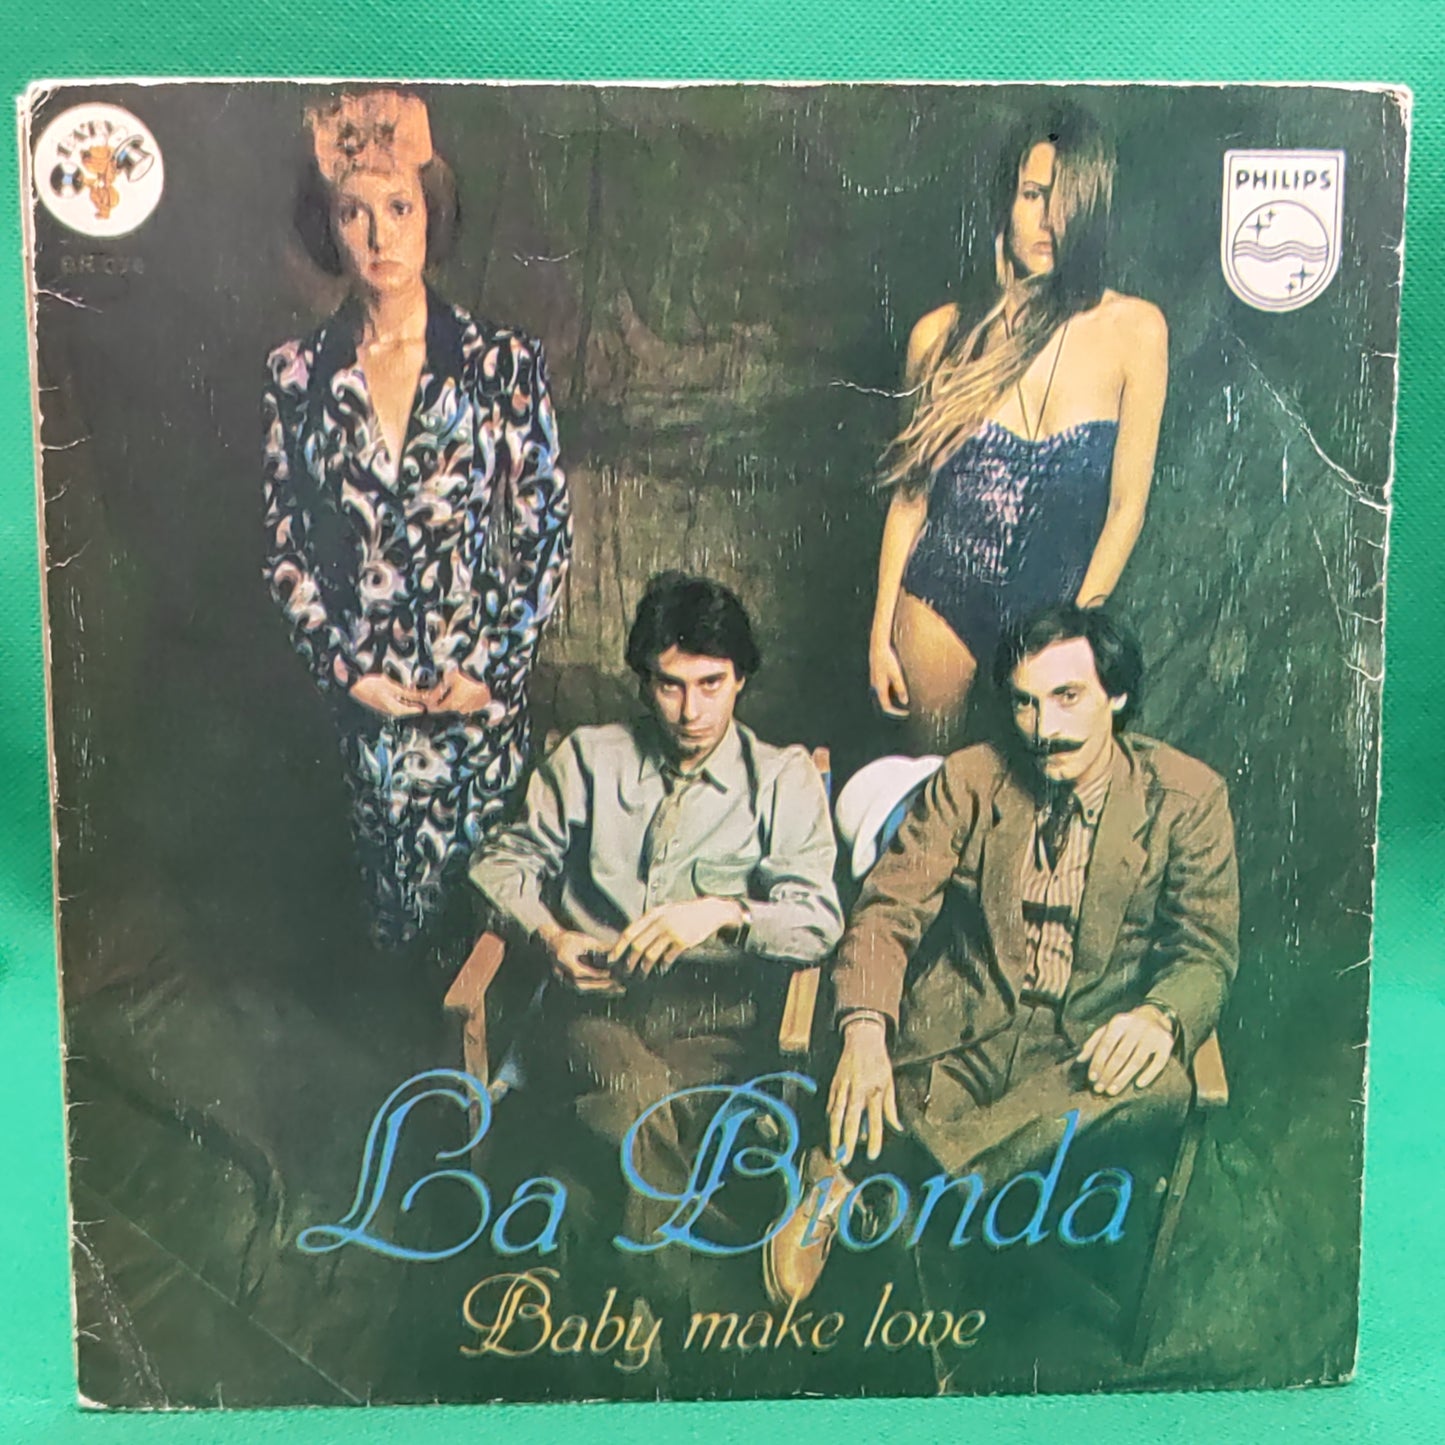 La Bionda - Baby make Love